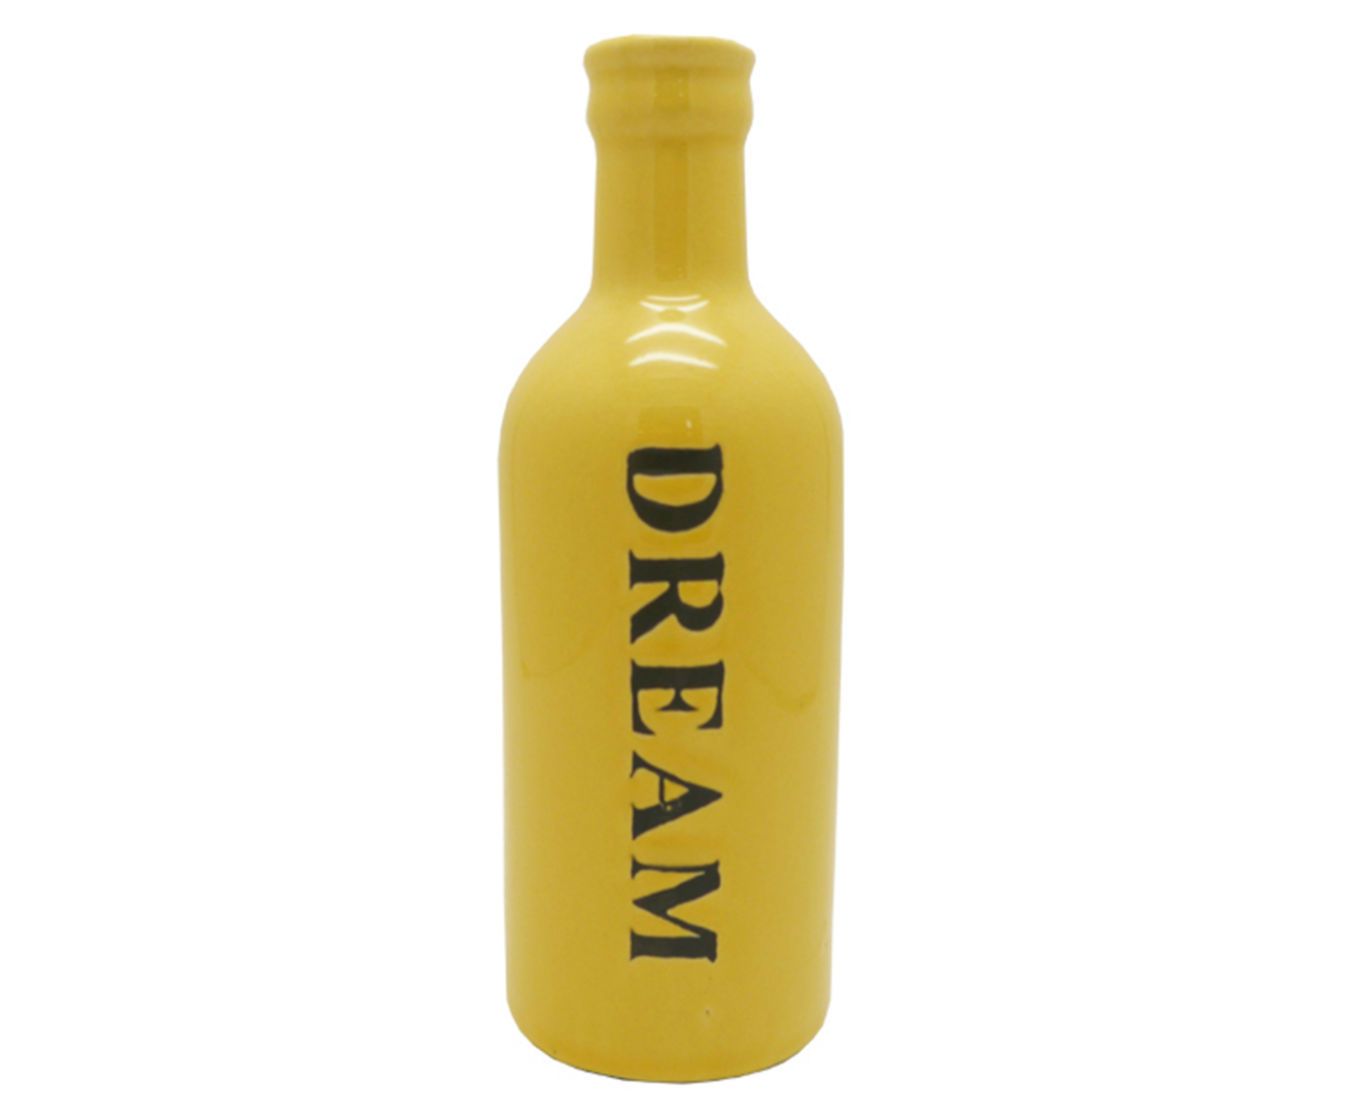 Vaso bottle oncre dream | Westwing.com.br